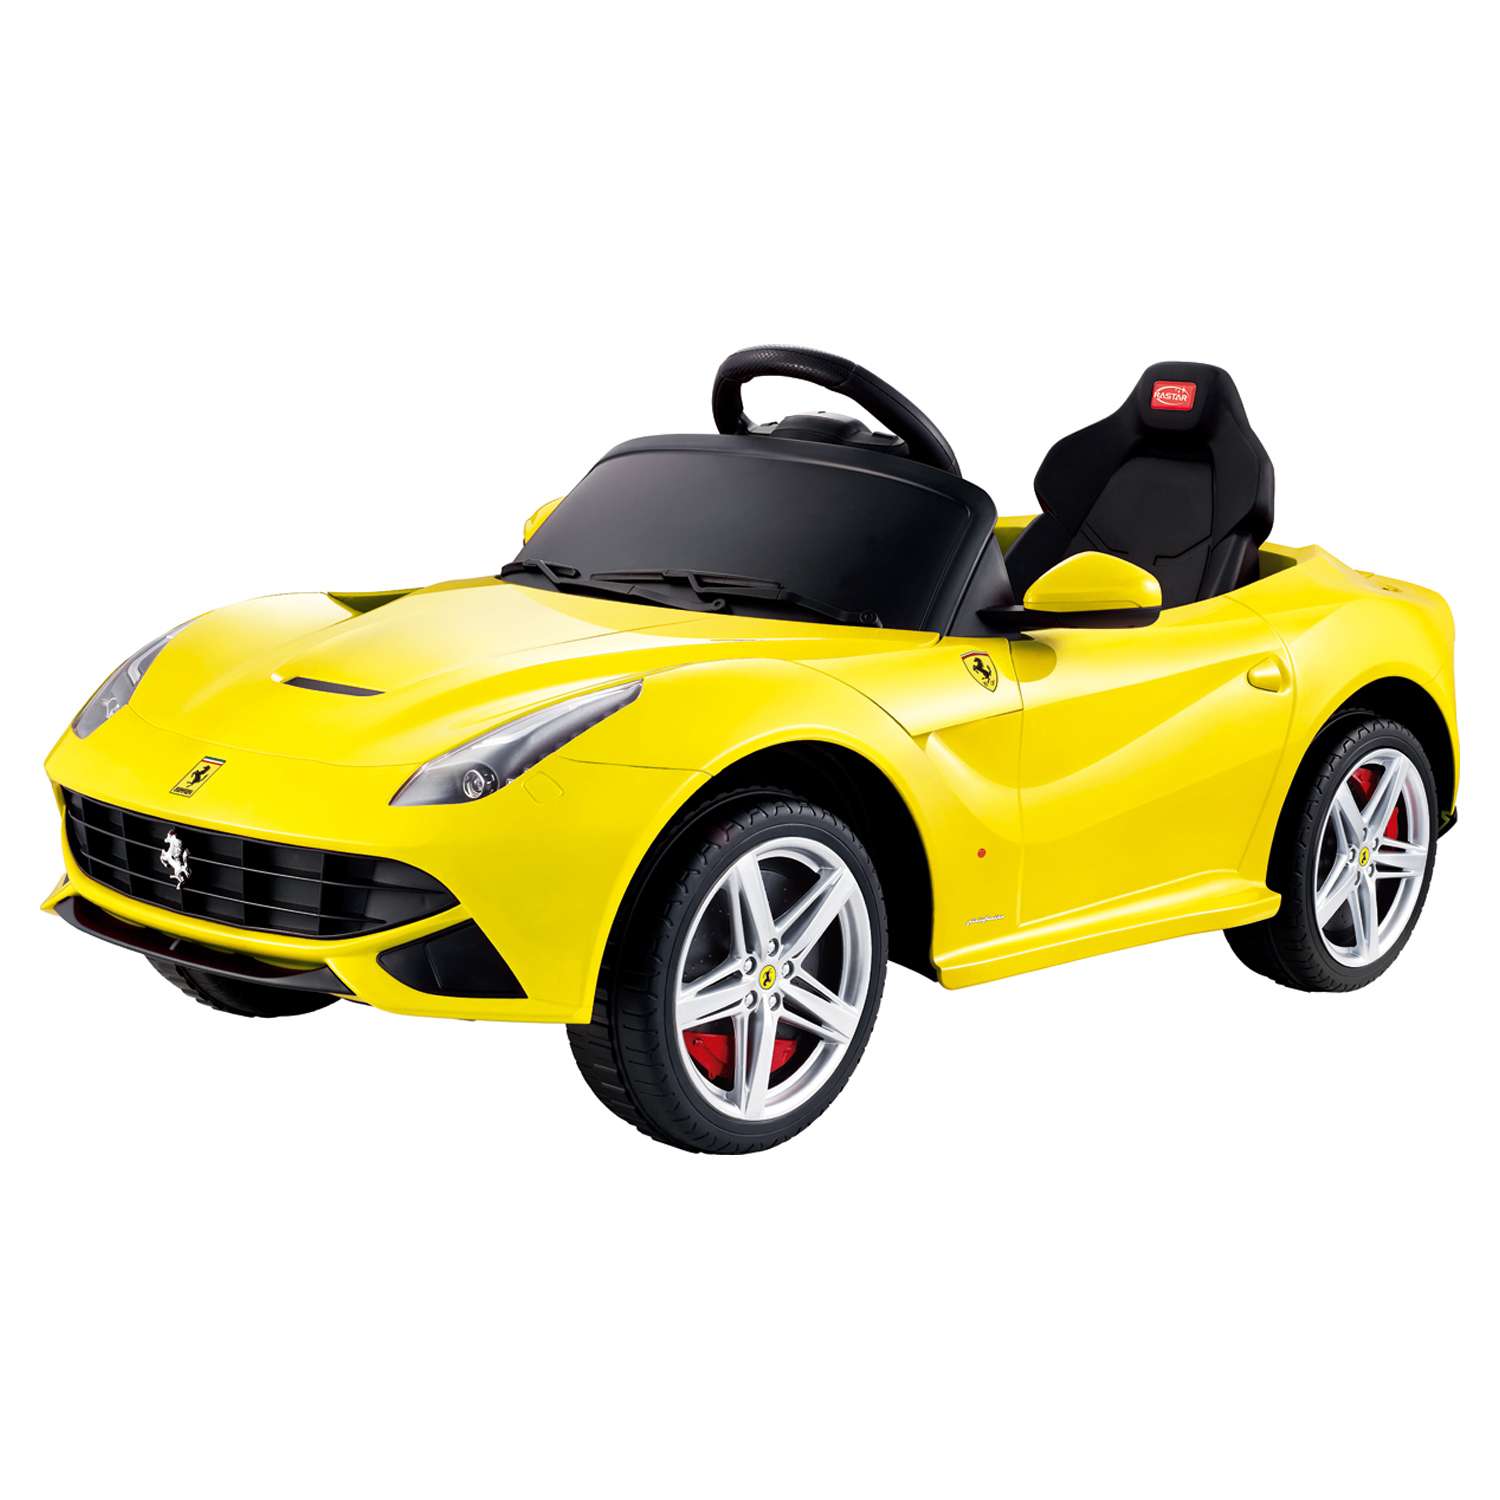 Машинка на аккумуляторе для катания. Электромобиль Ferrari детский 12v. Феррари а 12 электромобиль Rastar. Электромобиль желтый Феррари. Детский электромобиль FLQ-616 желтый.